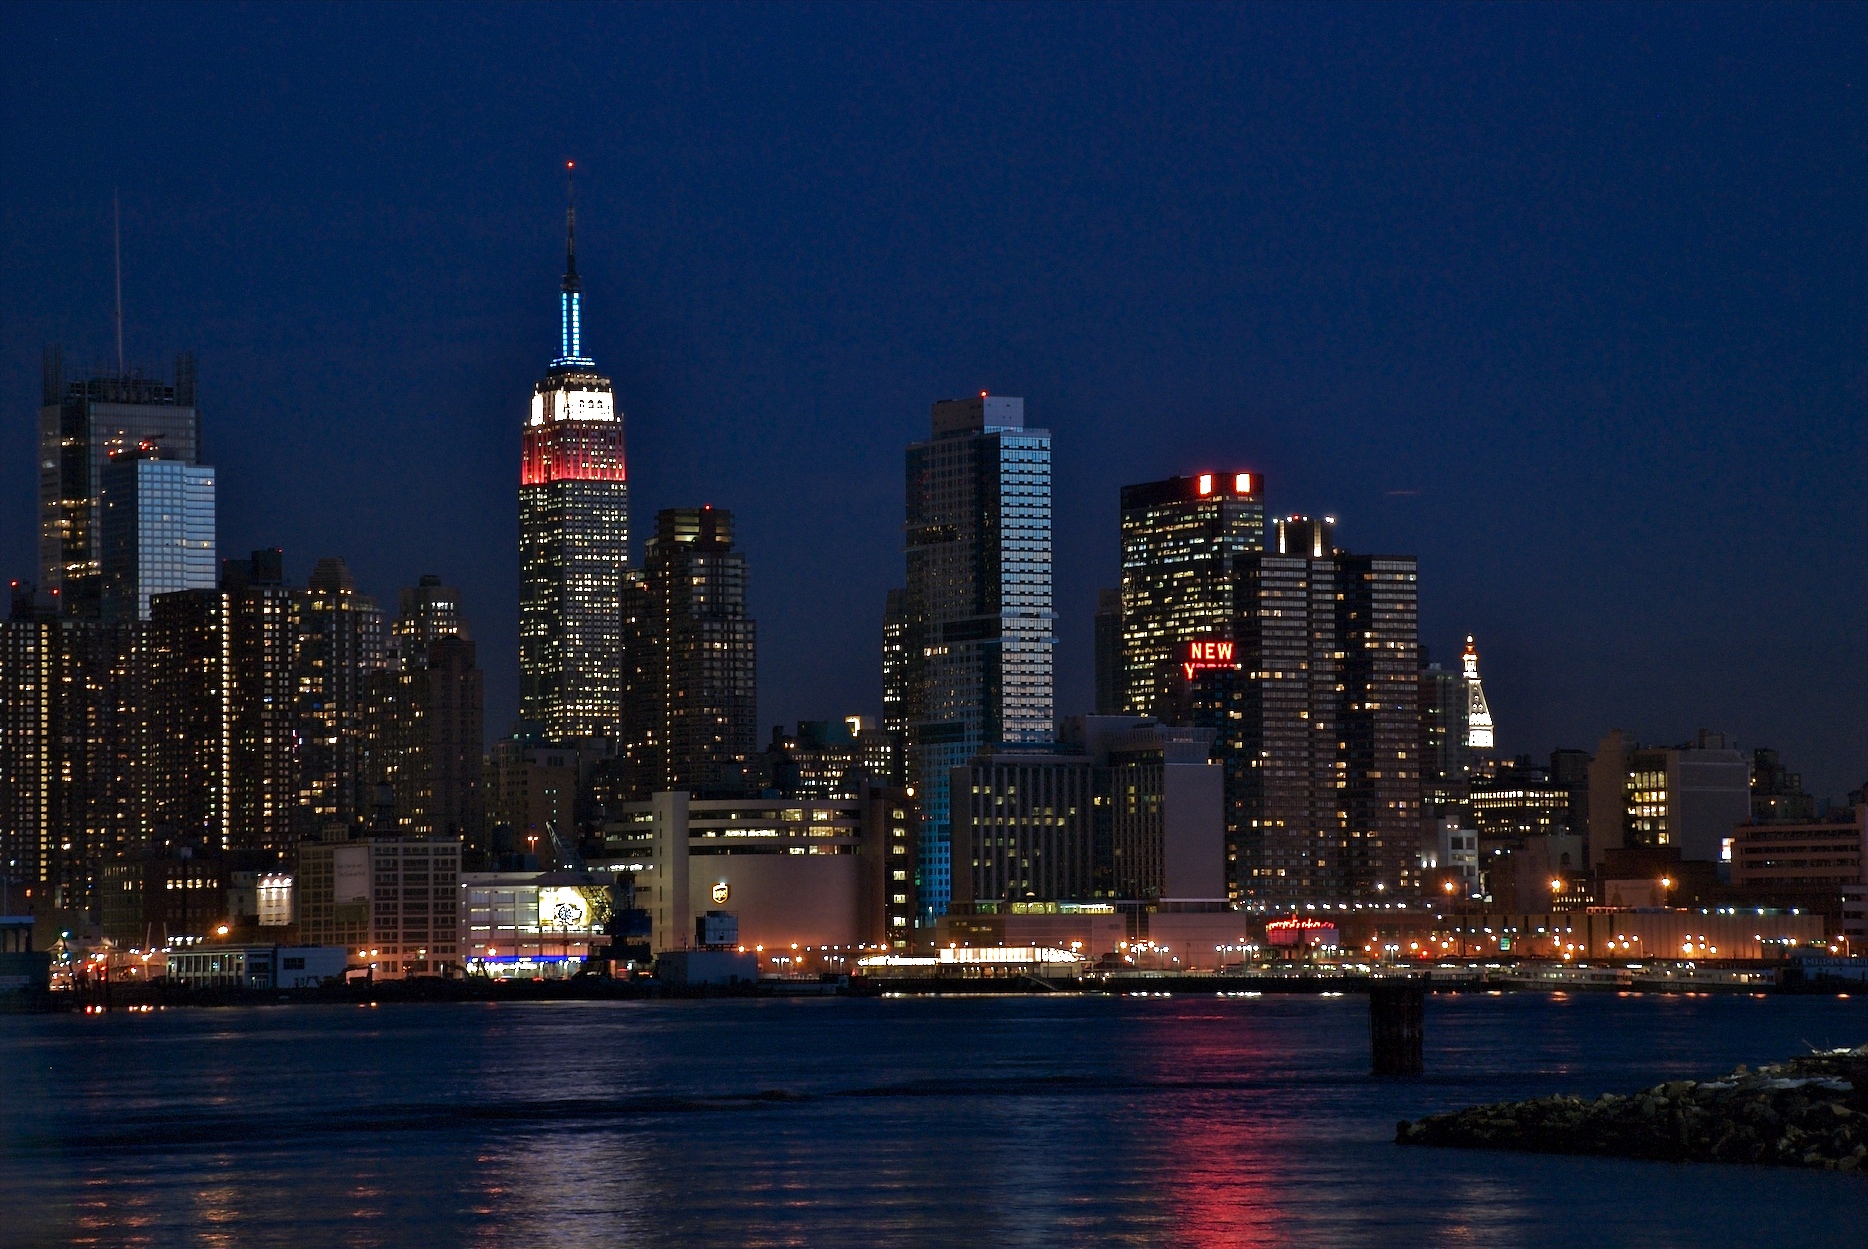 FileNew York City at night0.jpg Wikimedia Commons